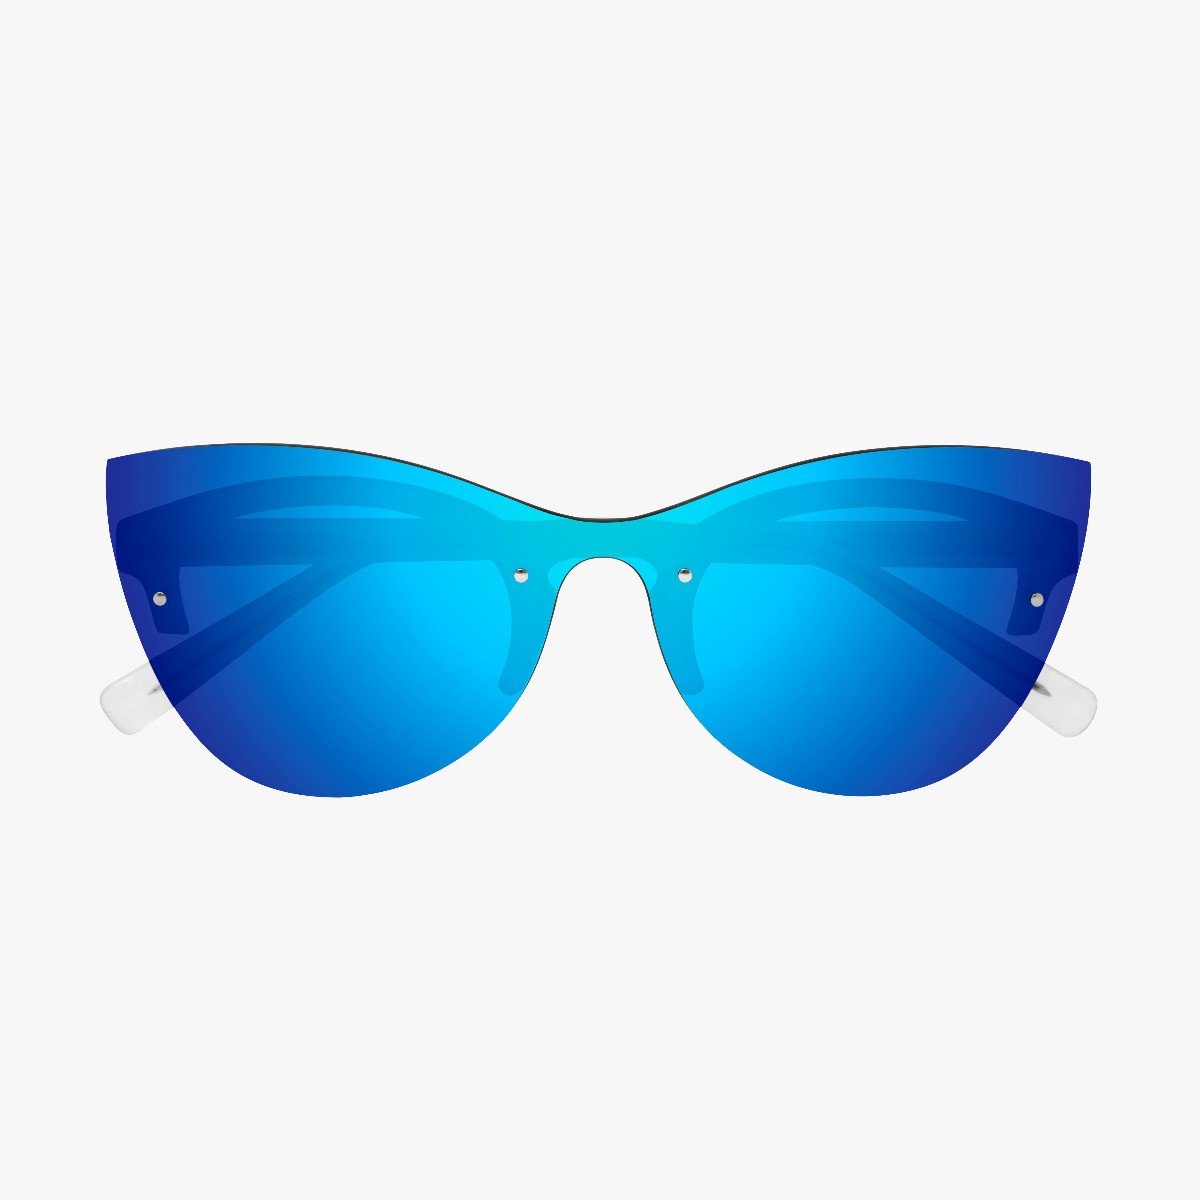 Scicon Sports | Phantom Lifestyle Women's Sunglasses - Frozen Frame, Blue Lens - EY180305